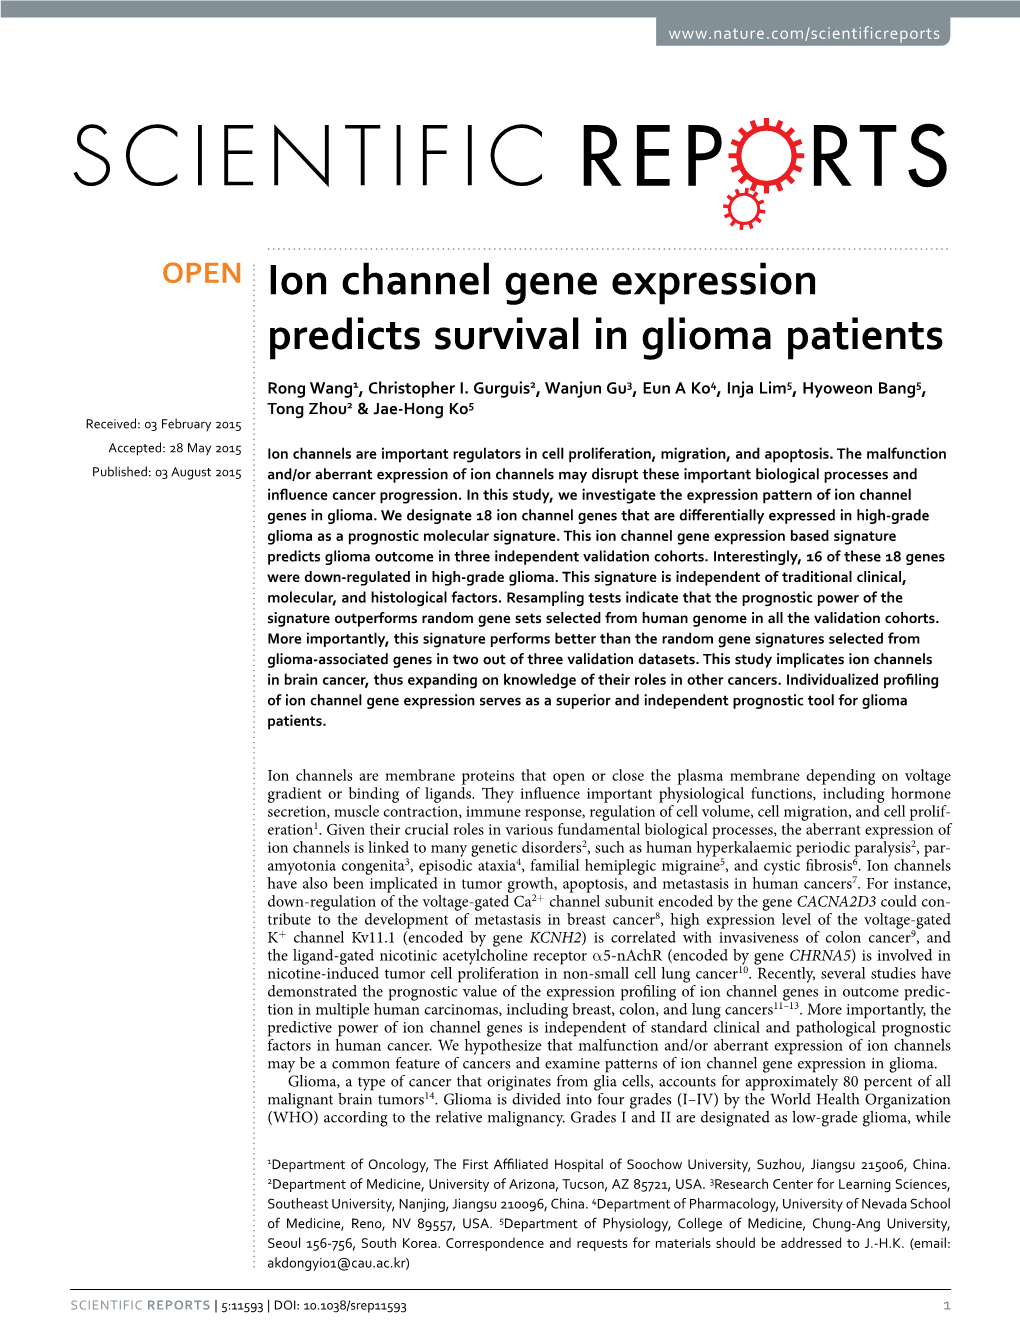 Ion Channel Gene Expression Predicts Survival in Glioma Patients